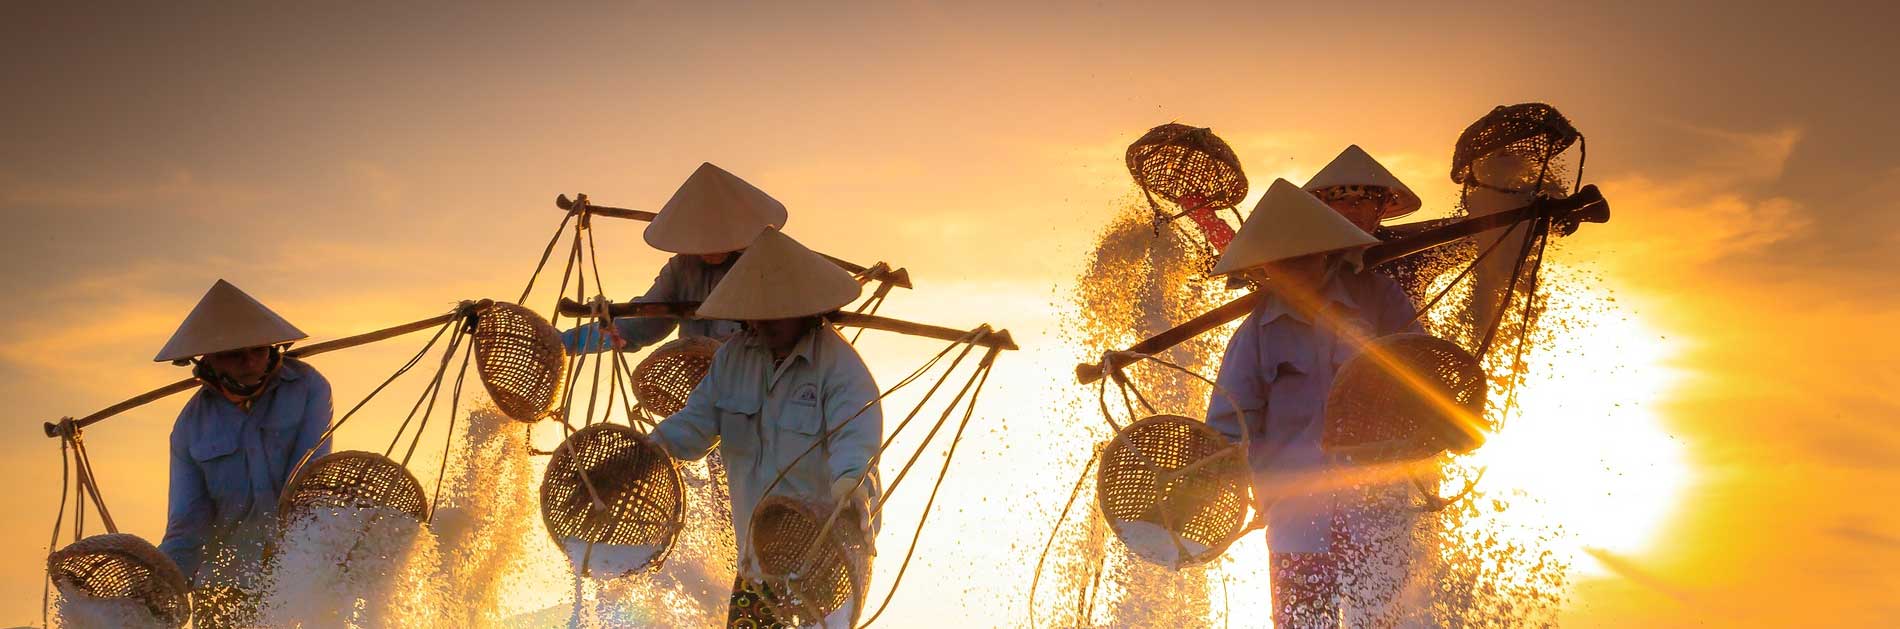 11 Motivos para viajar a Vietnam este invierno